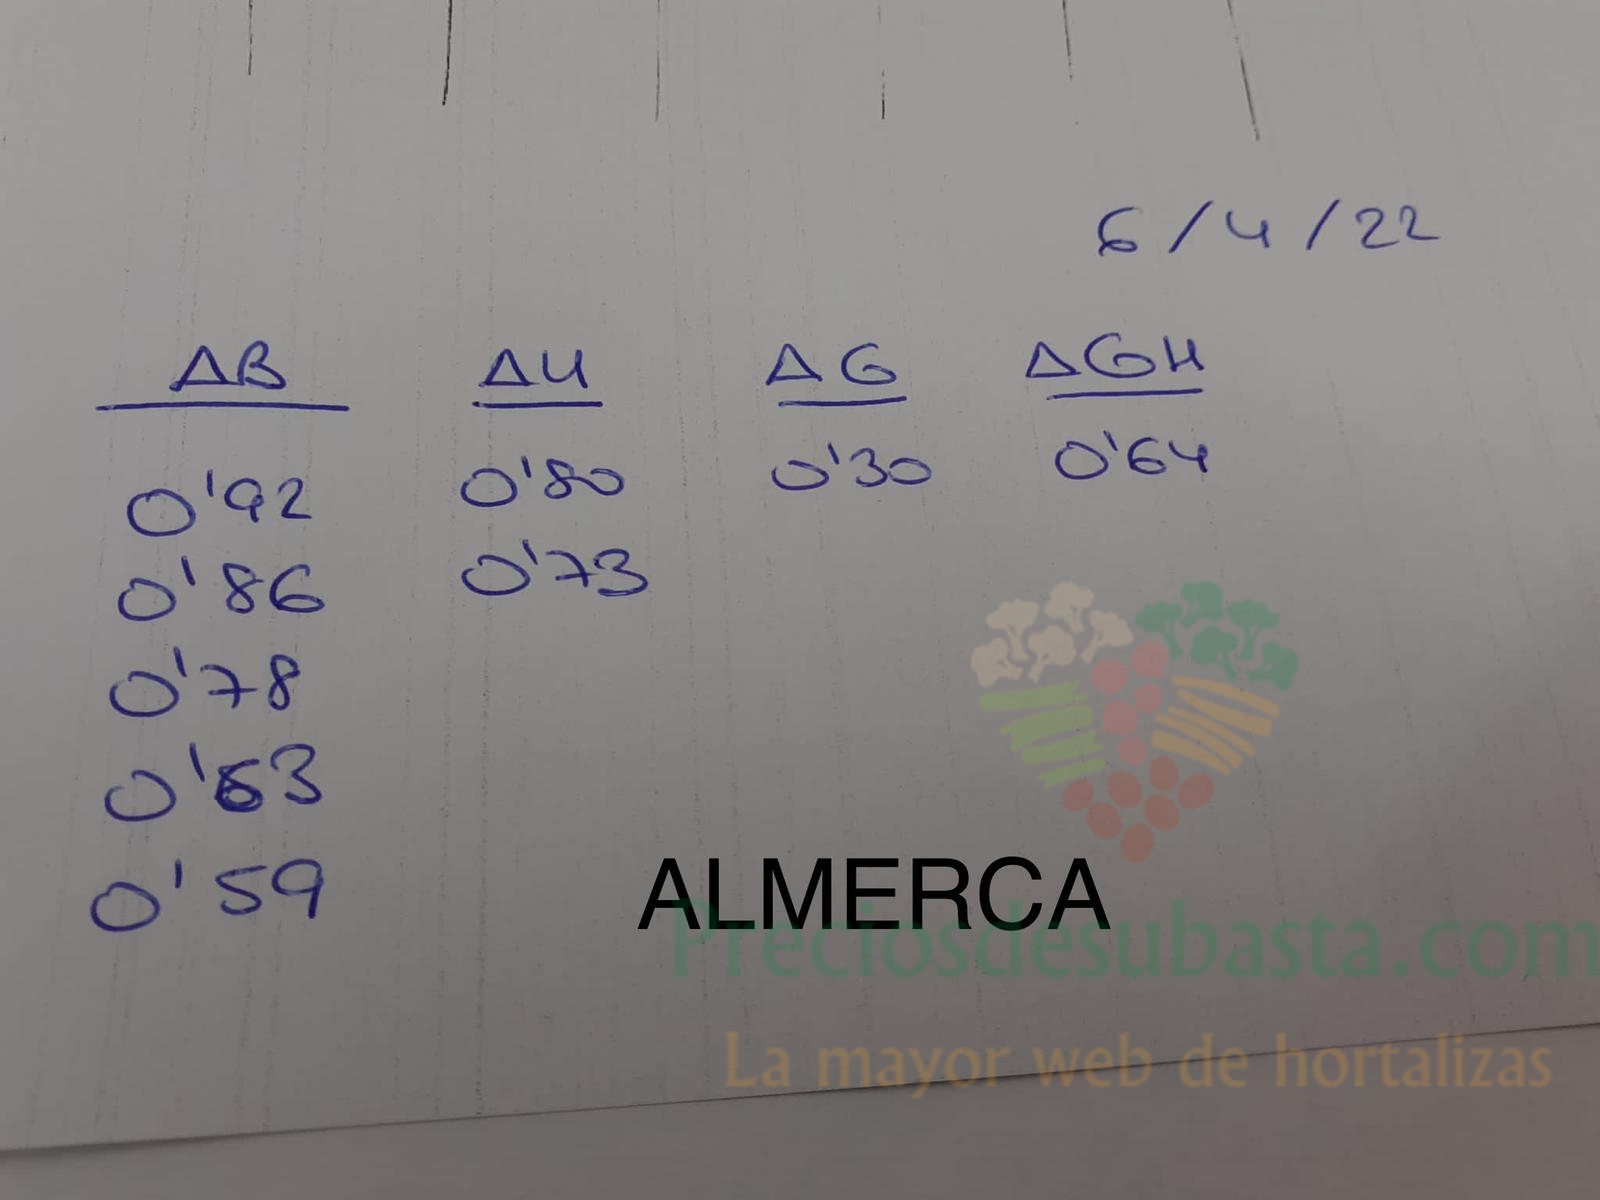 Subasta hortofrutícola Almerca 6 de abril 2022